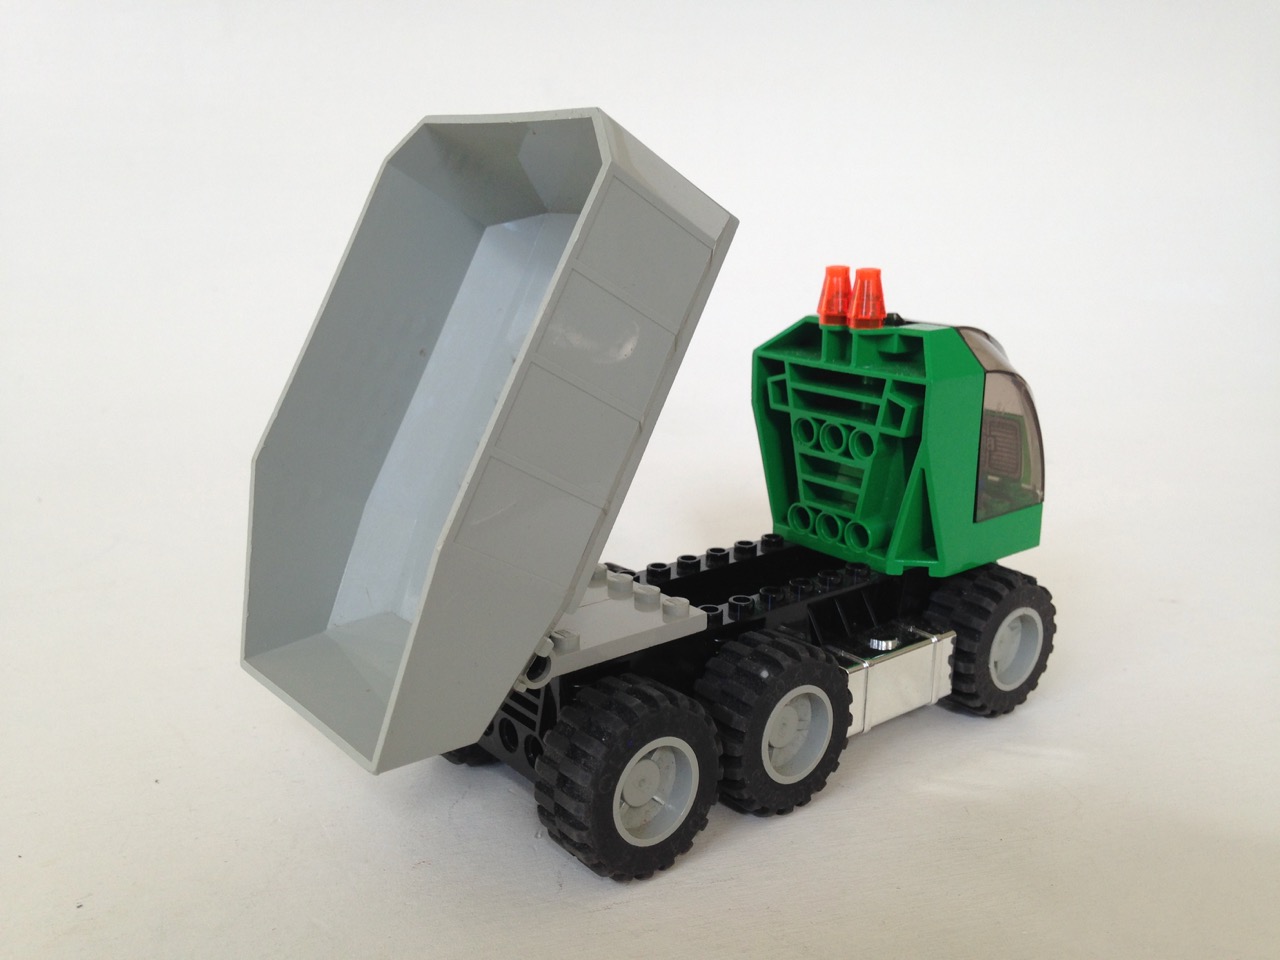 LE021 LEGO DUMP TRUCK WITH FIGURE